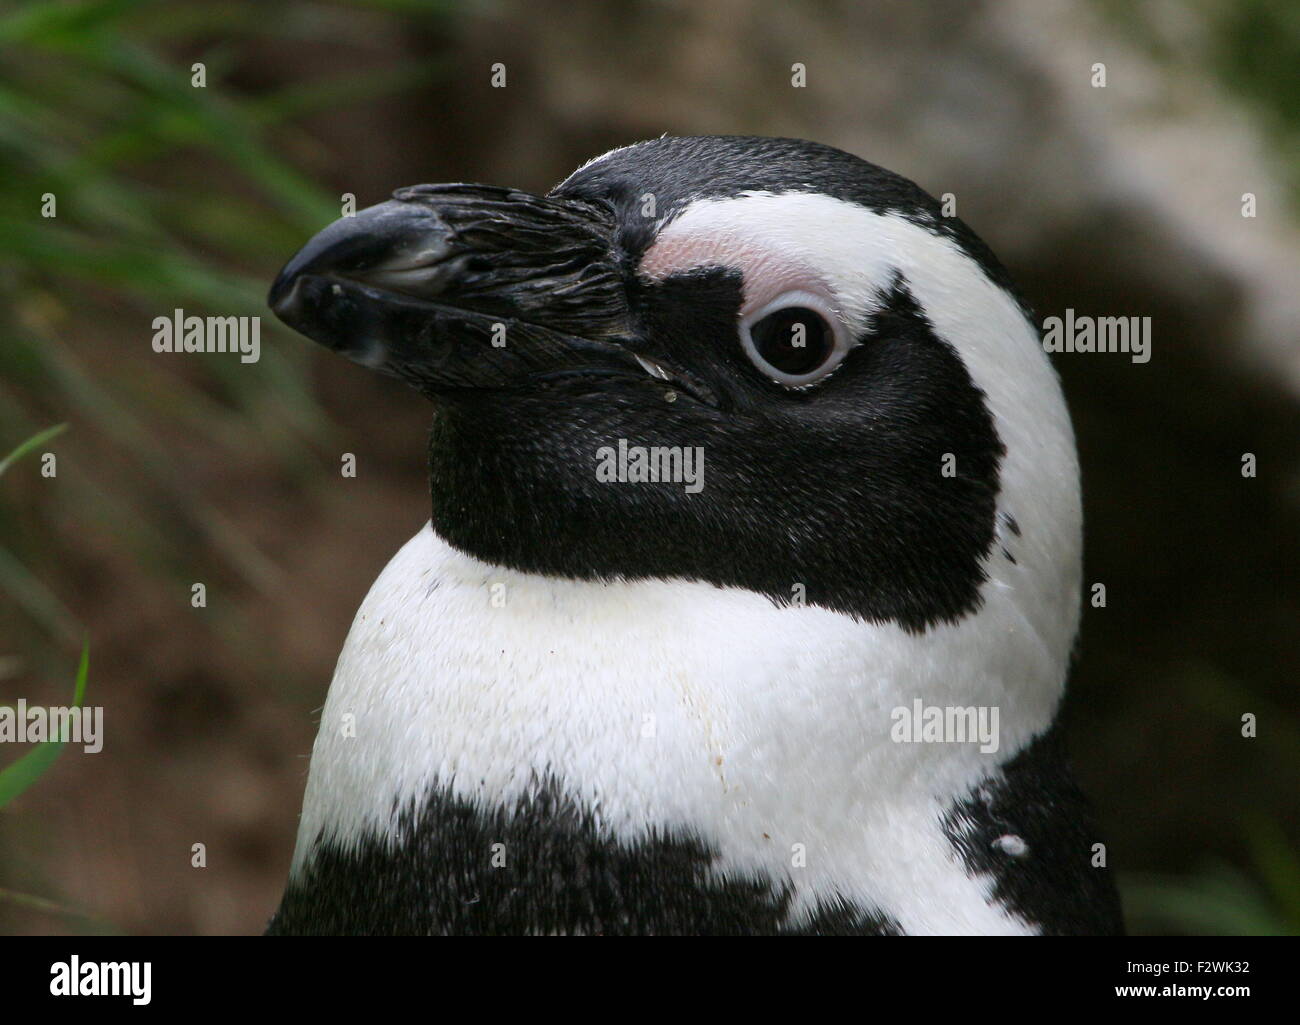 Black footed penguin (Spheniscus demersus) portrait A.k.a. African penguin or Jackass penguin Stock Photo